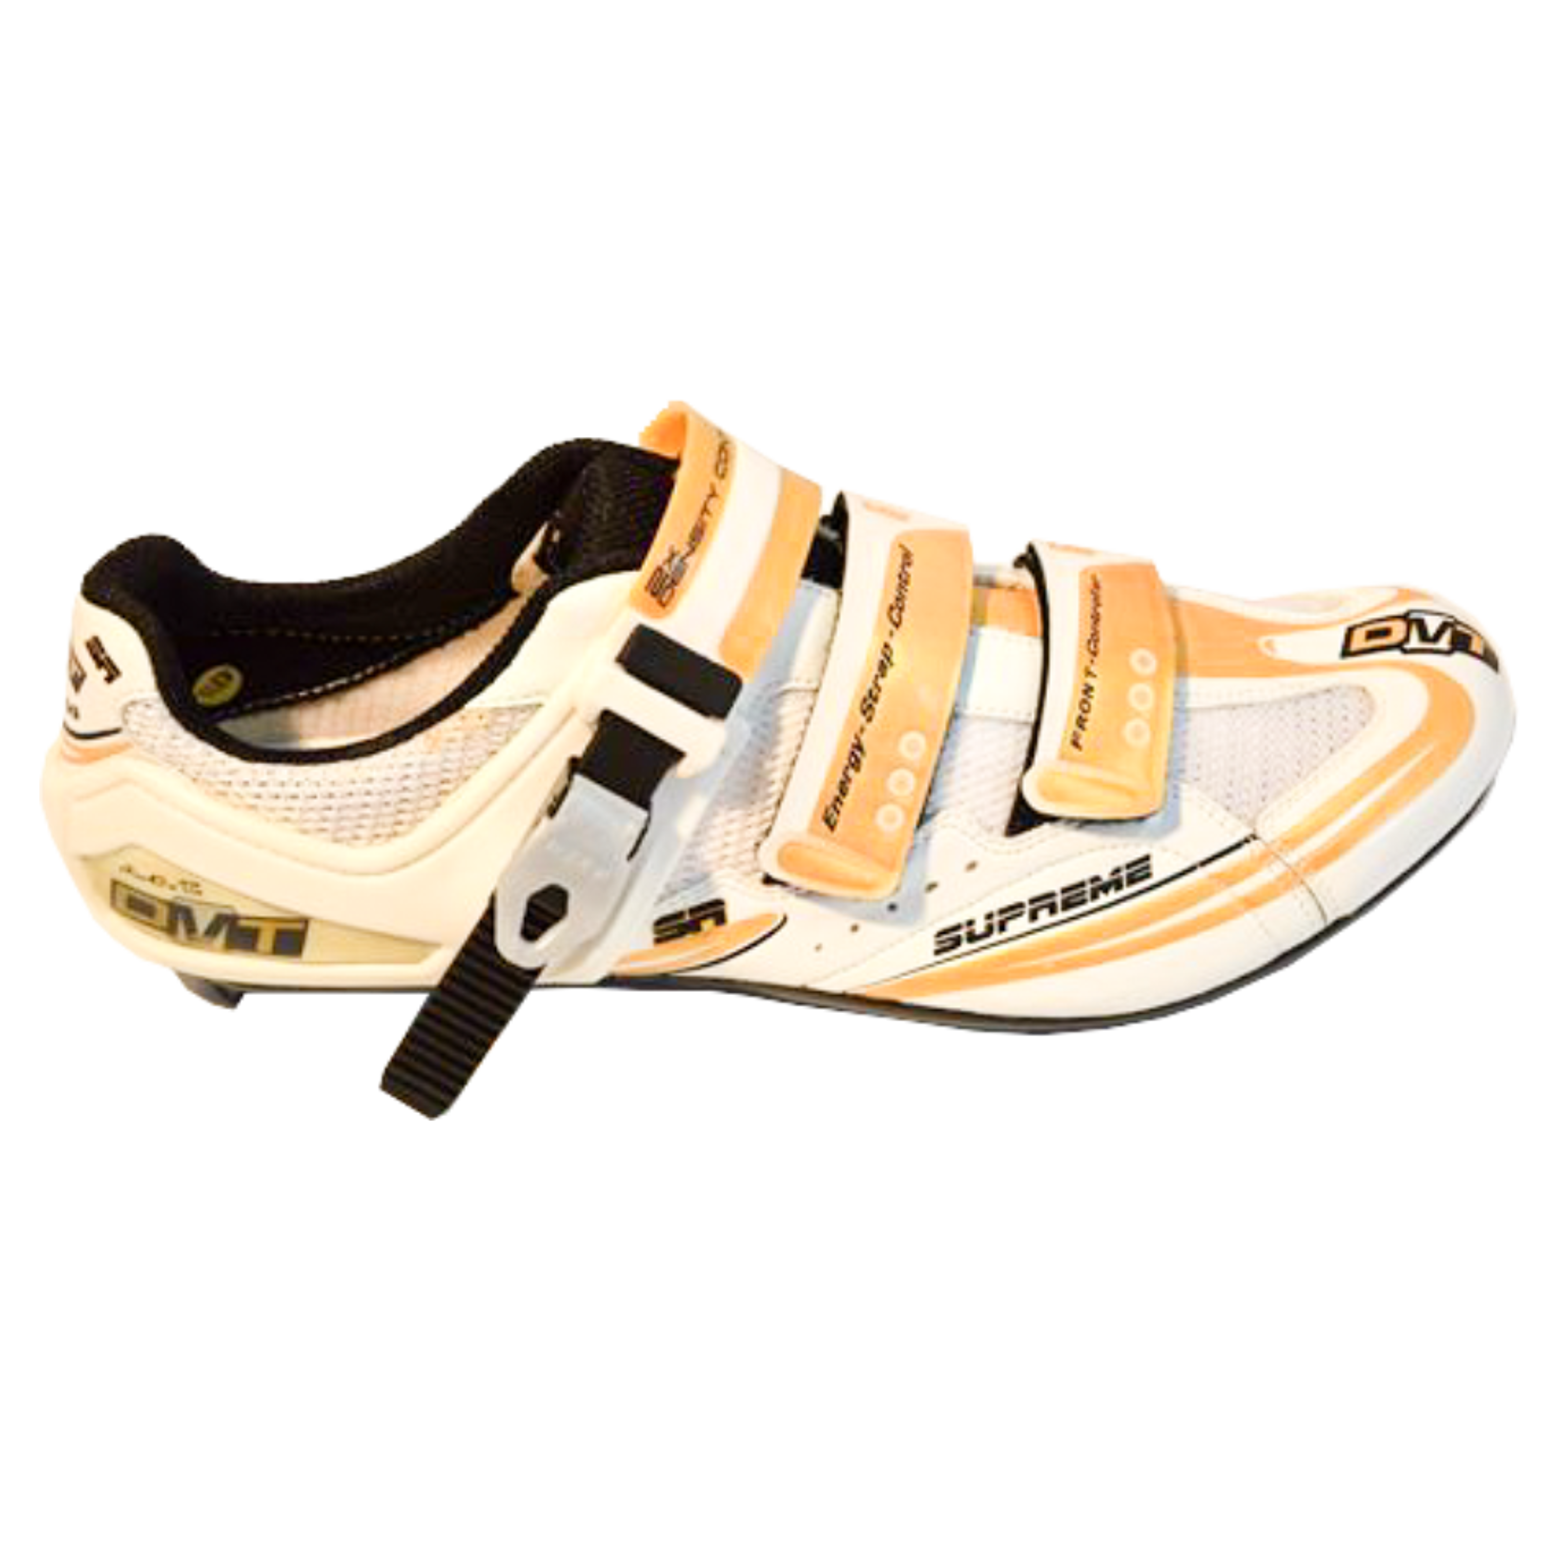 Imagem de Sapato Ultimax 2 branco/dourado - sola carbono